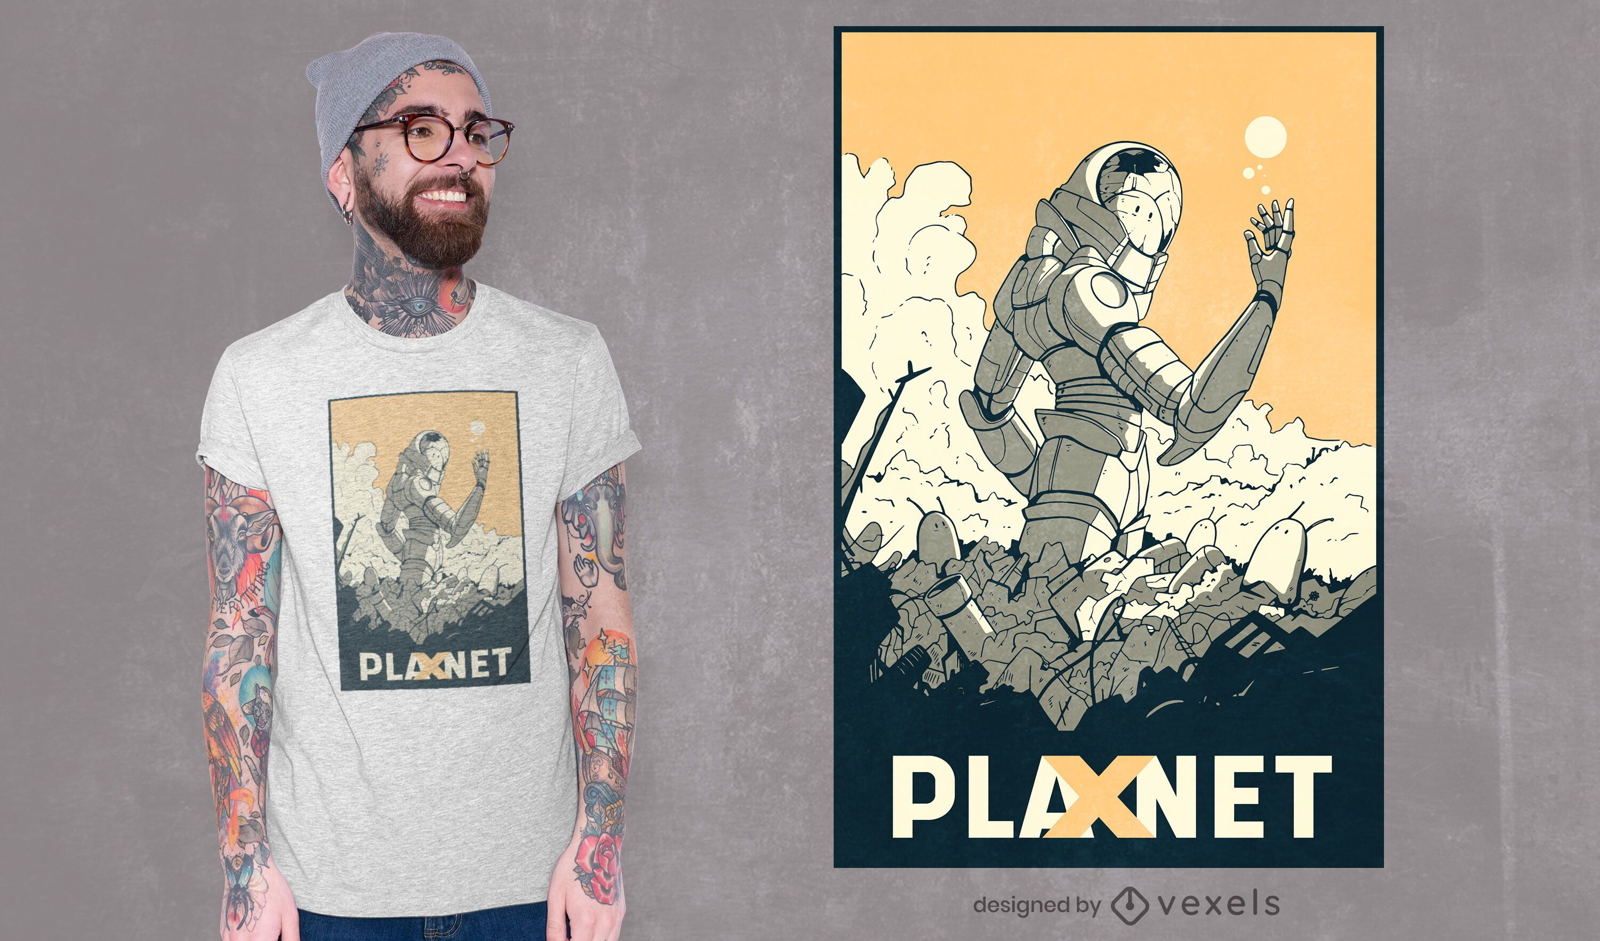 Planet x t-shirt design